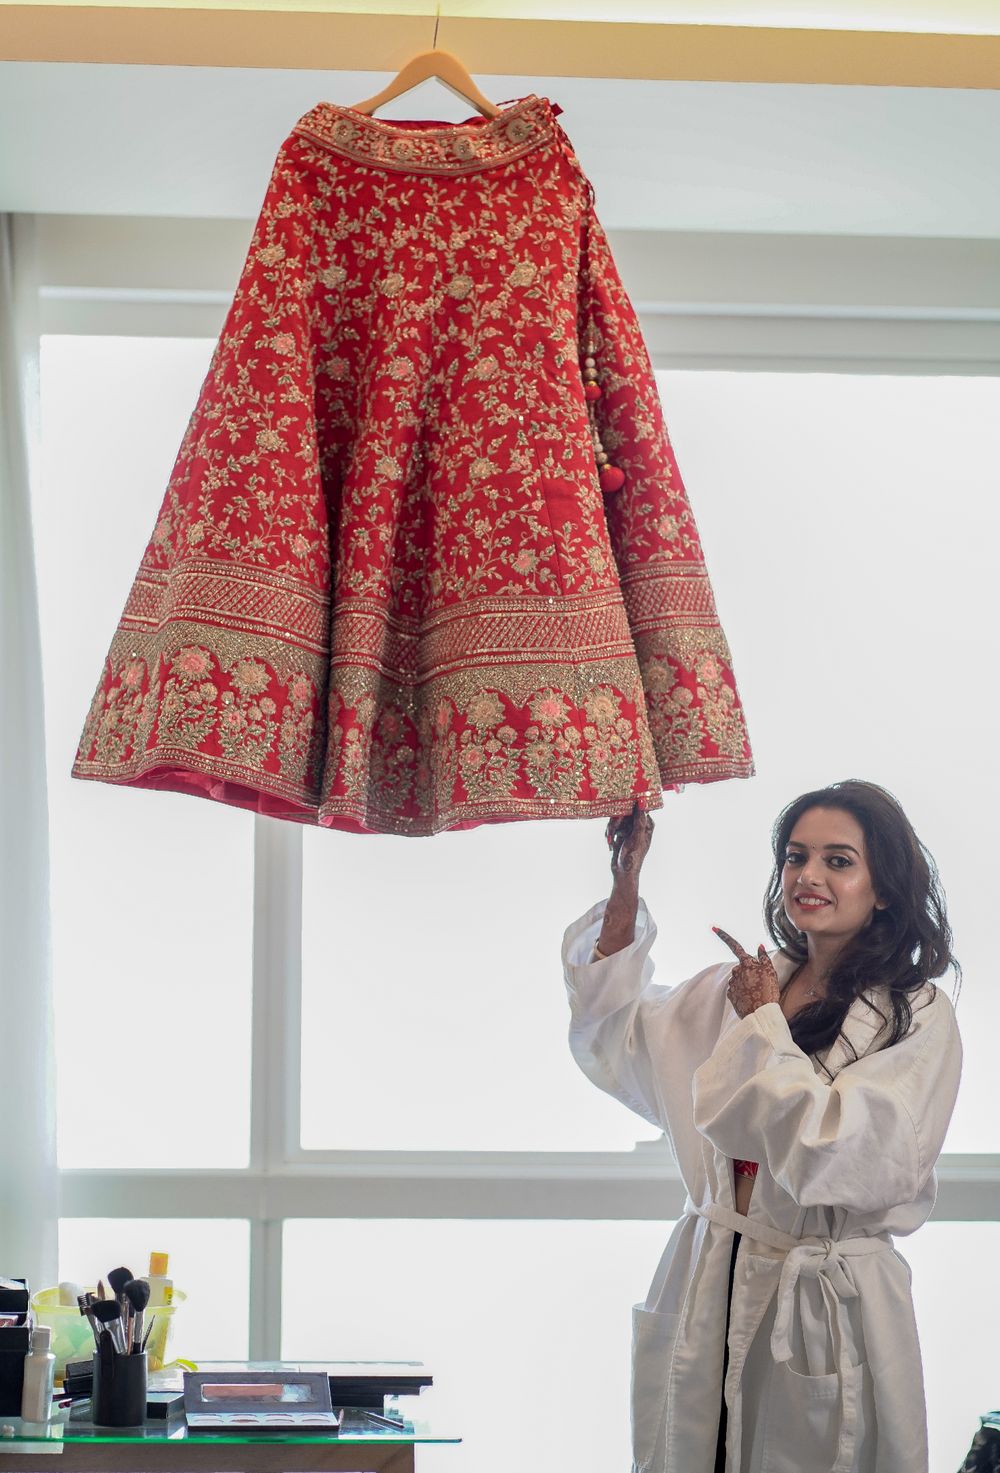 Photo of Bride with her lehenga on hanger in room shot